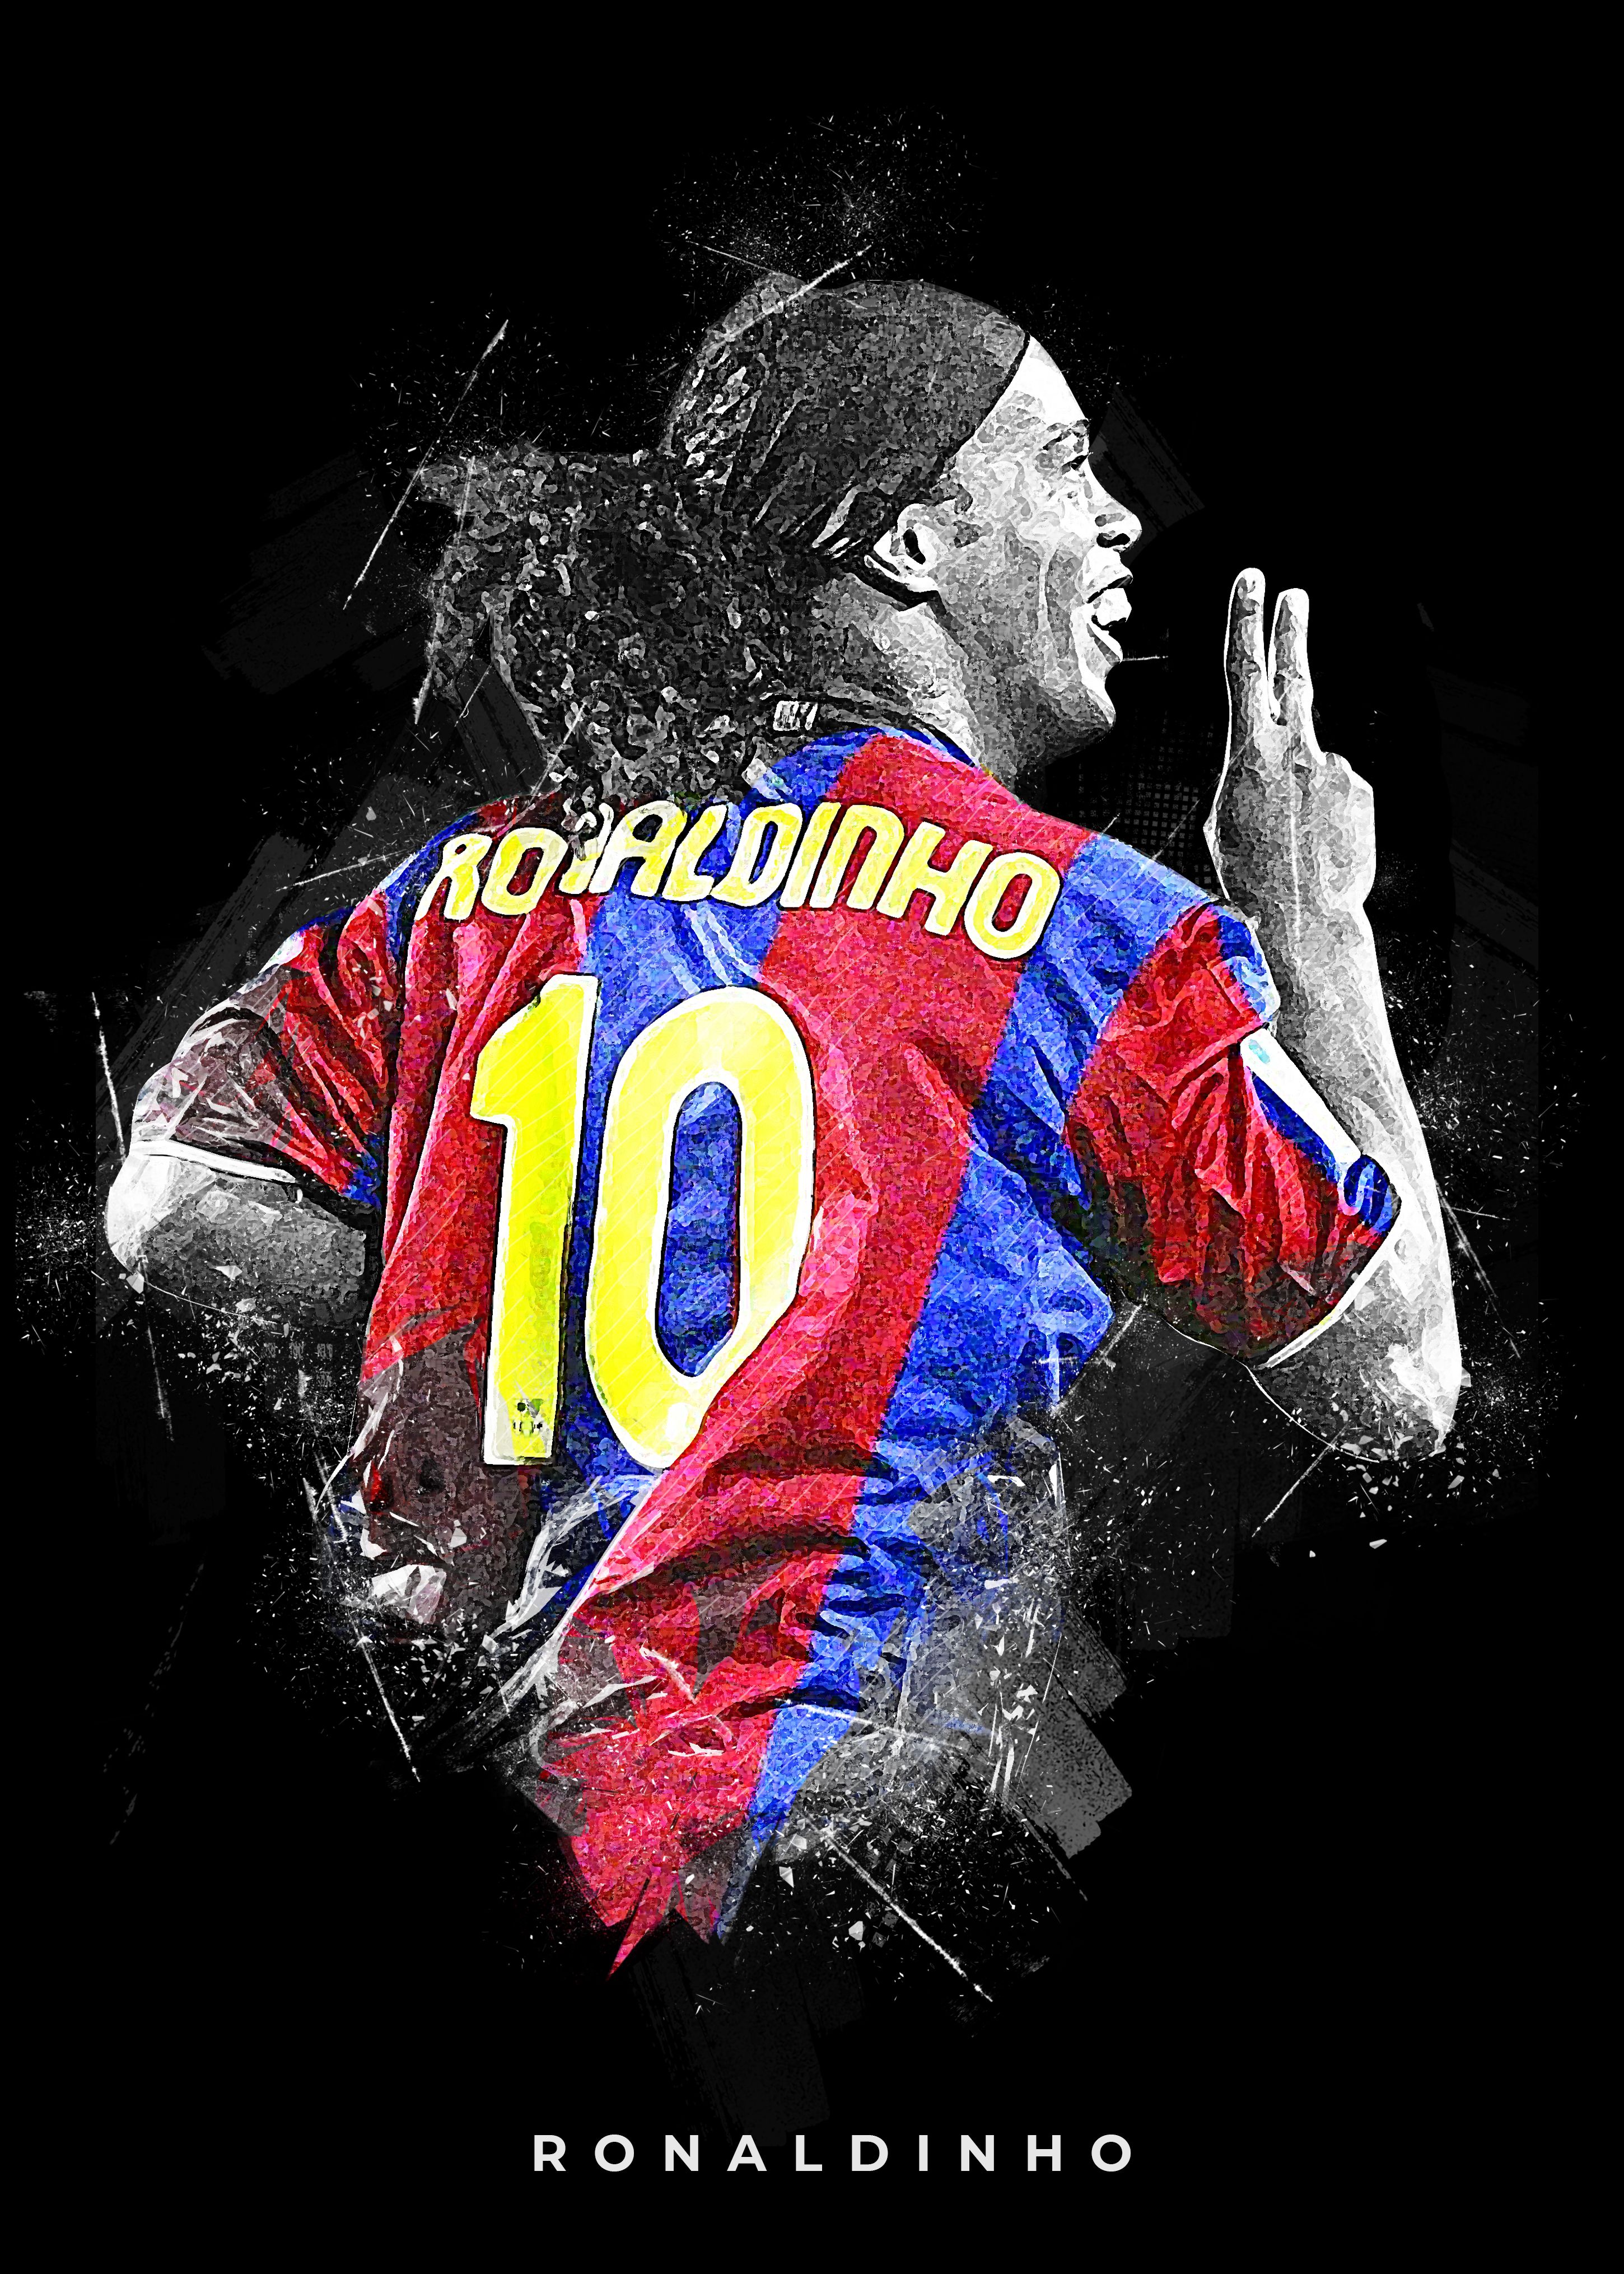 Ronaldinho Barcelona Iconic Art. Ronaldinho wallpaper, Football artwork, Football picture